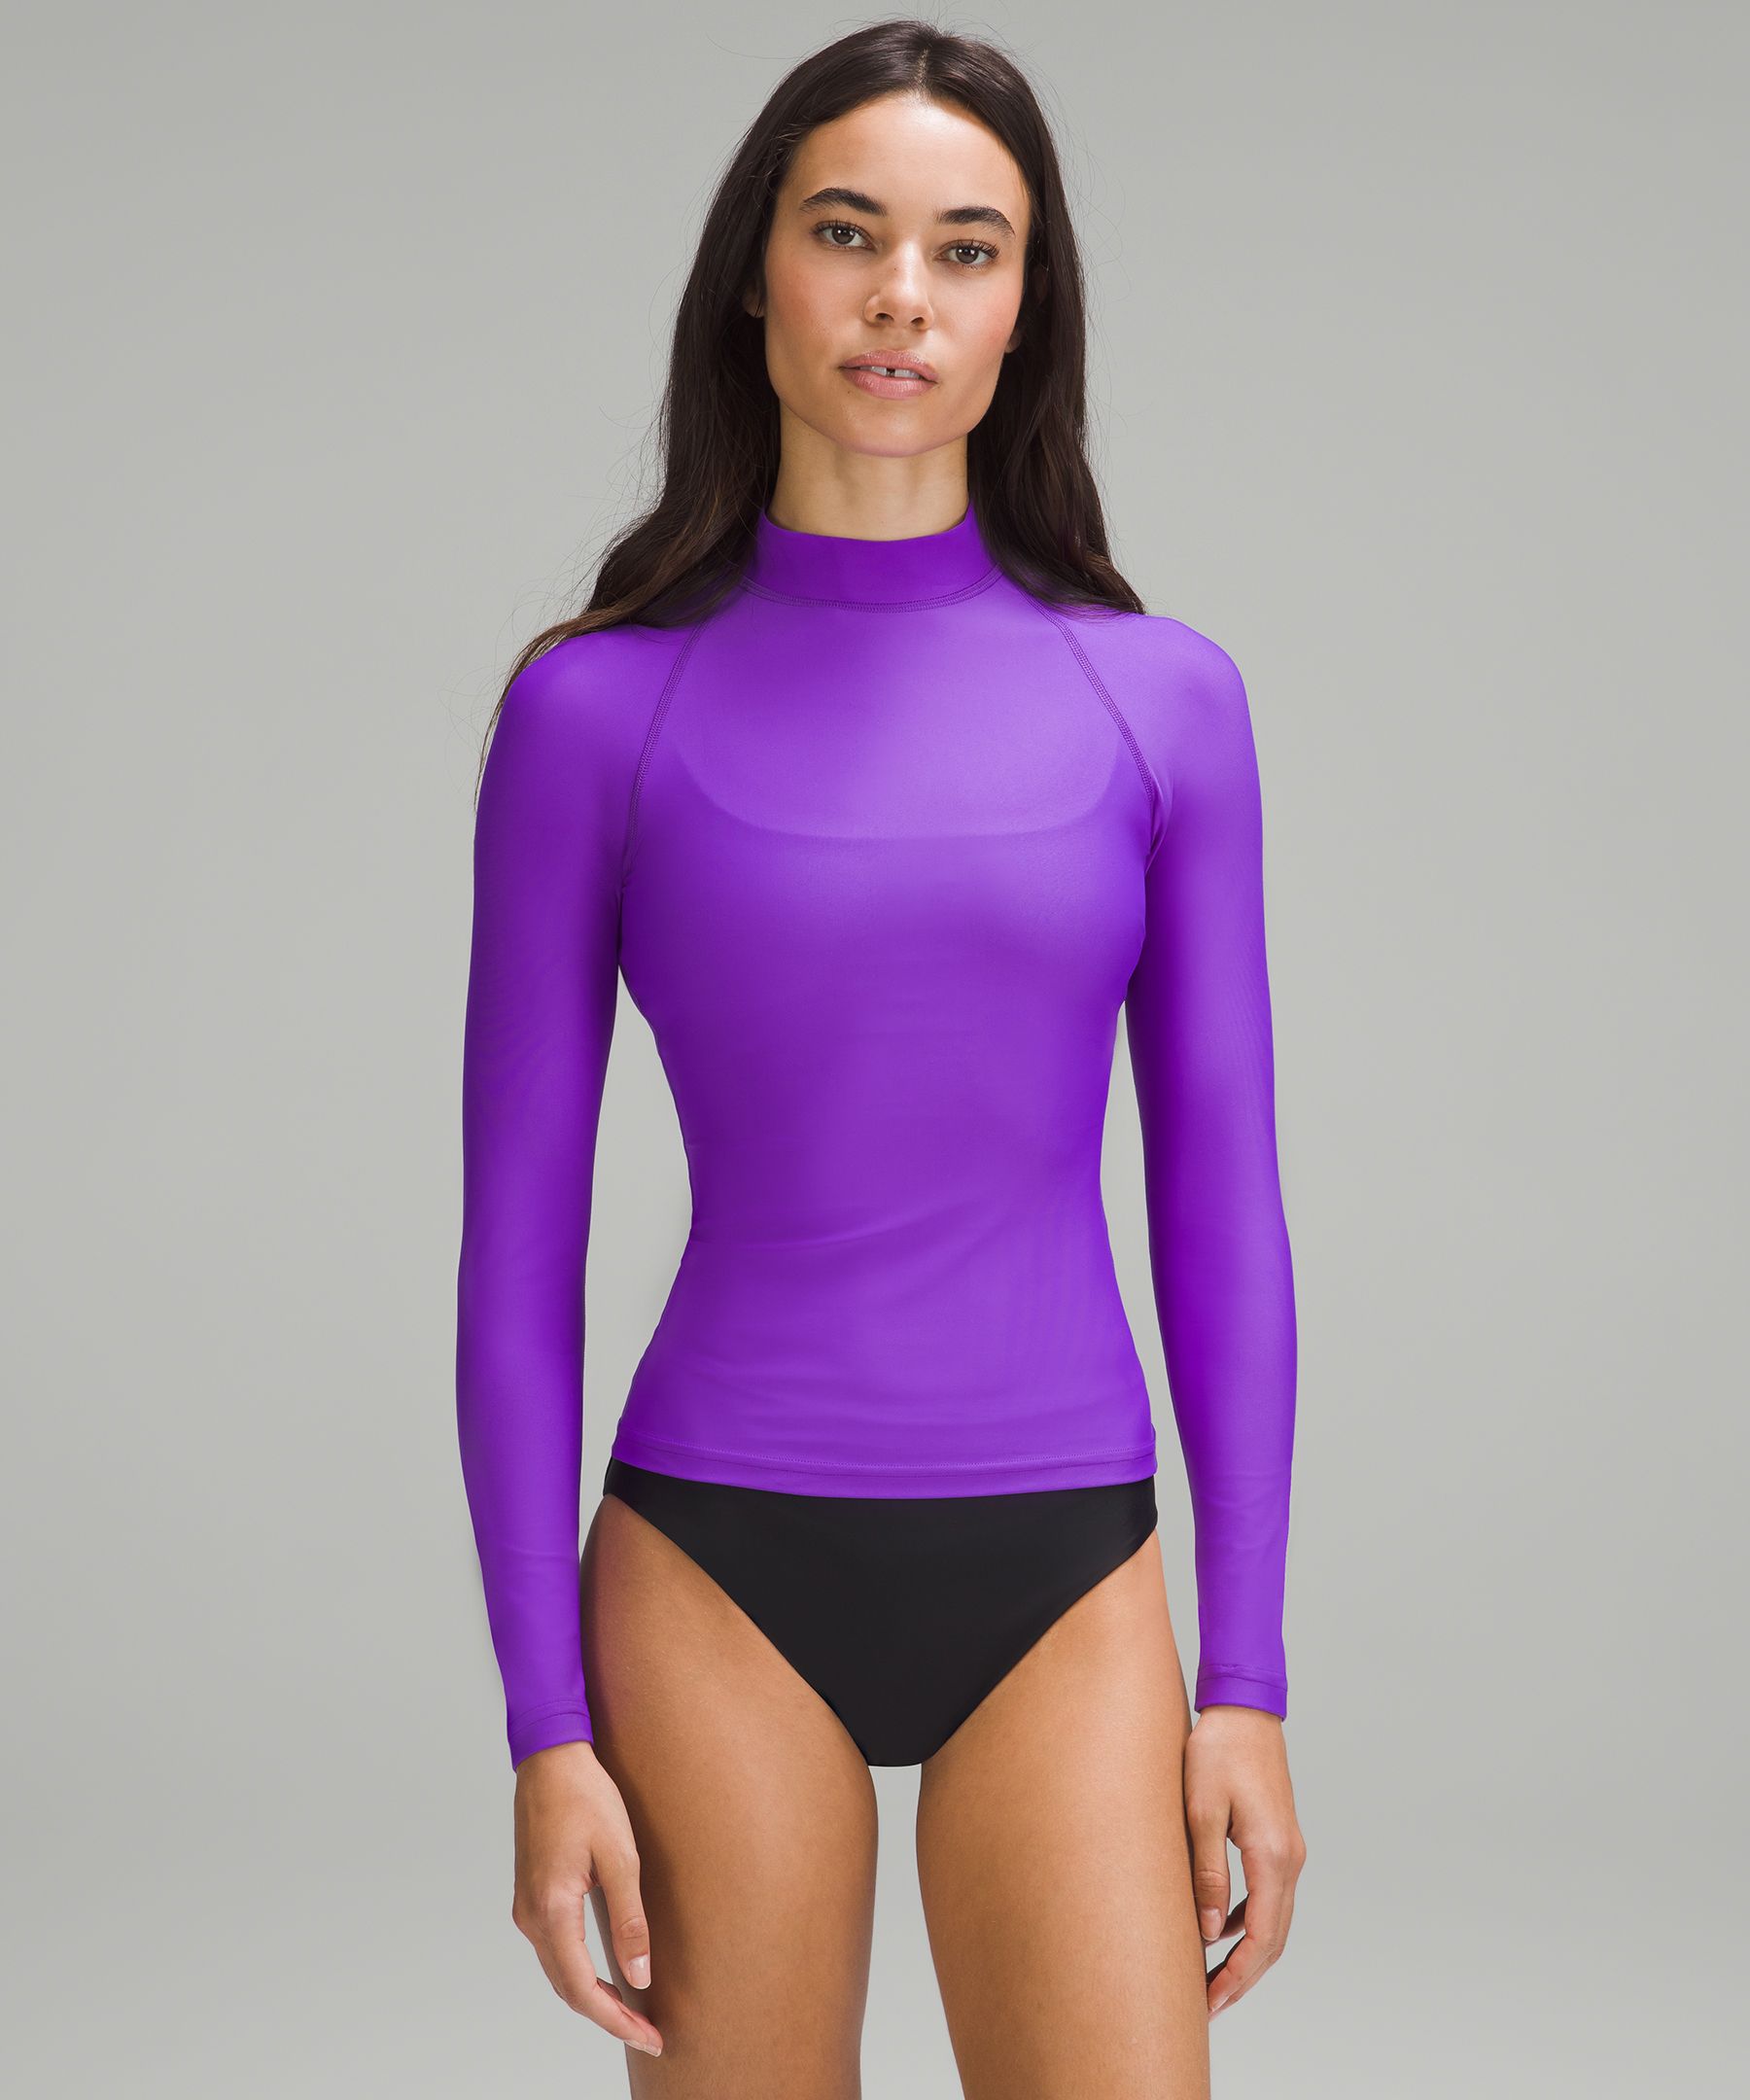 Lululemon Waterside UV Protection Long-Sleeve Shirt - 146955048